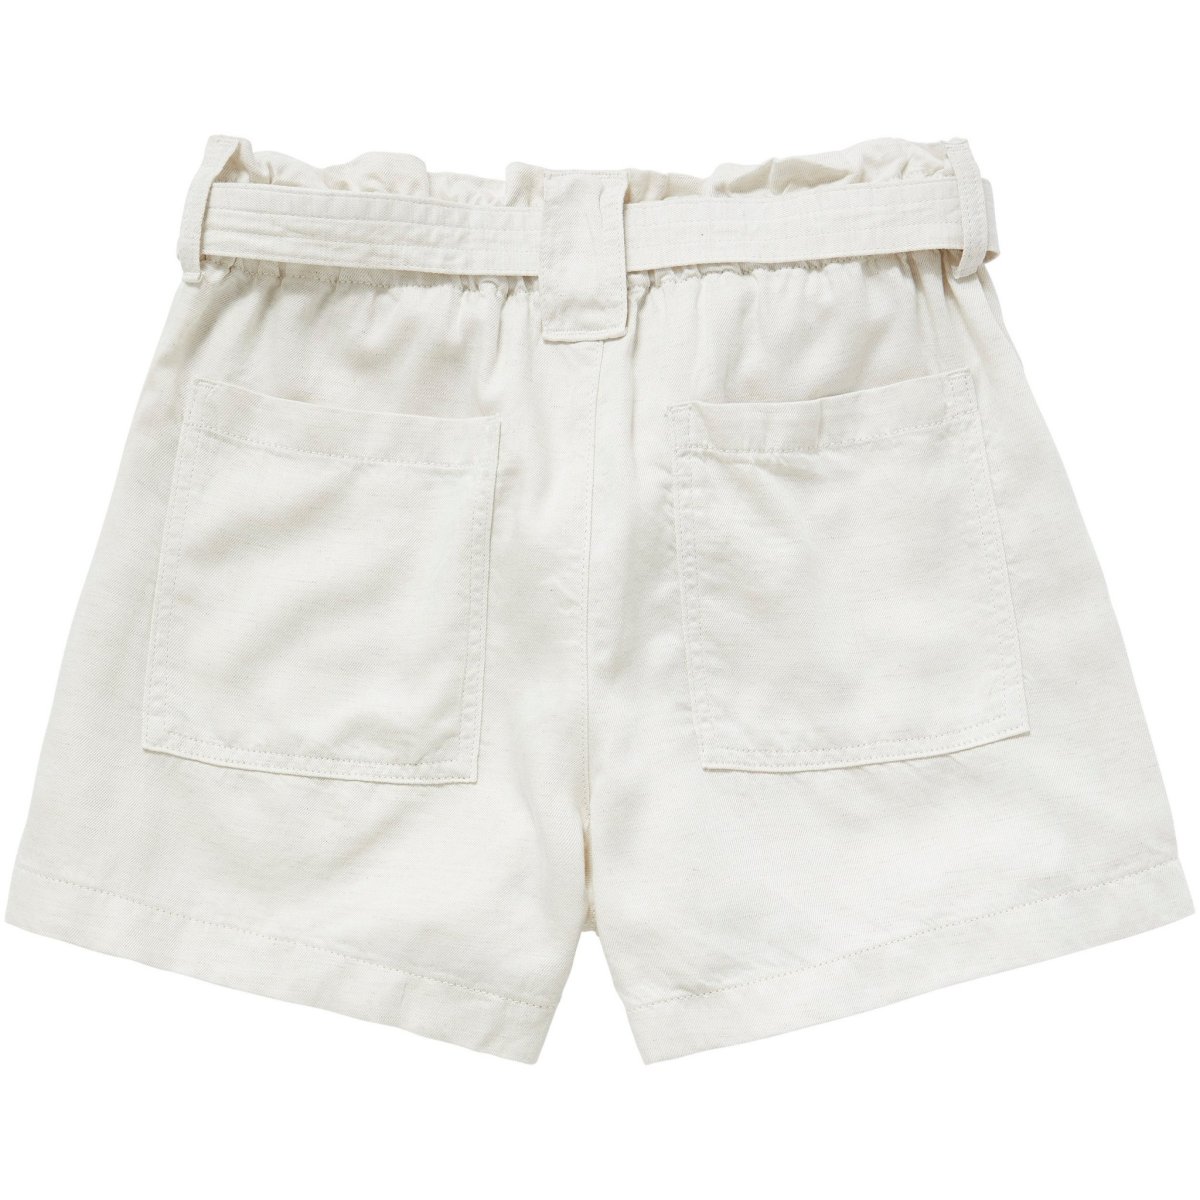 leah-shorts-16985.jpeg